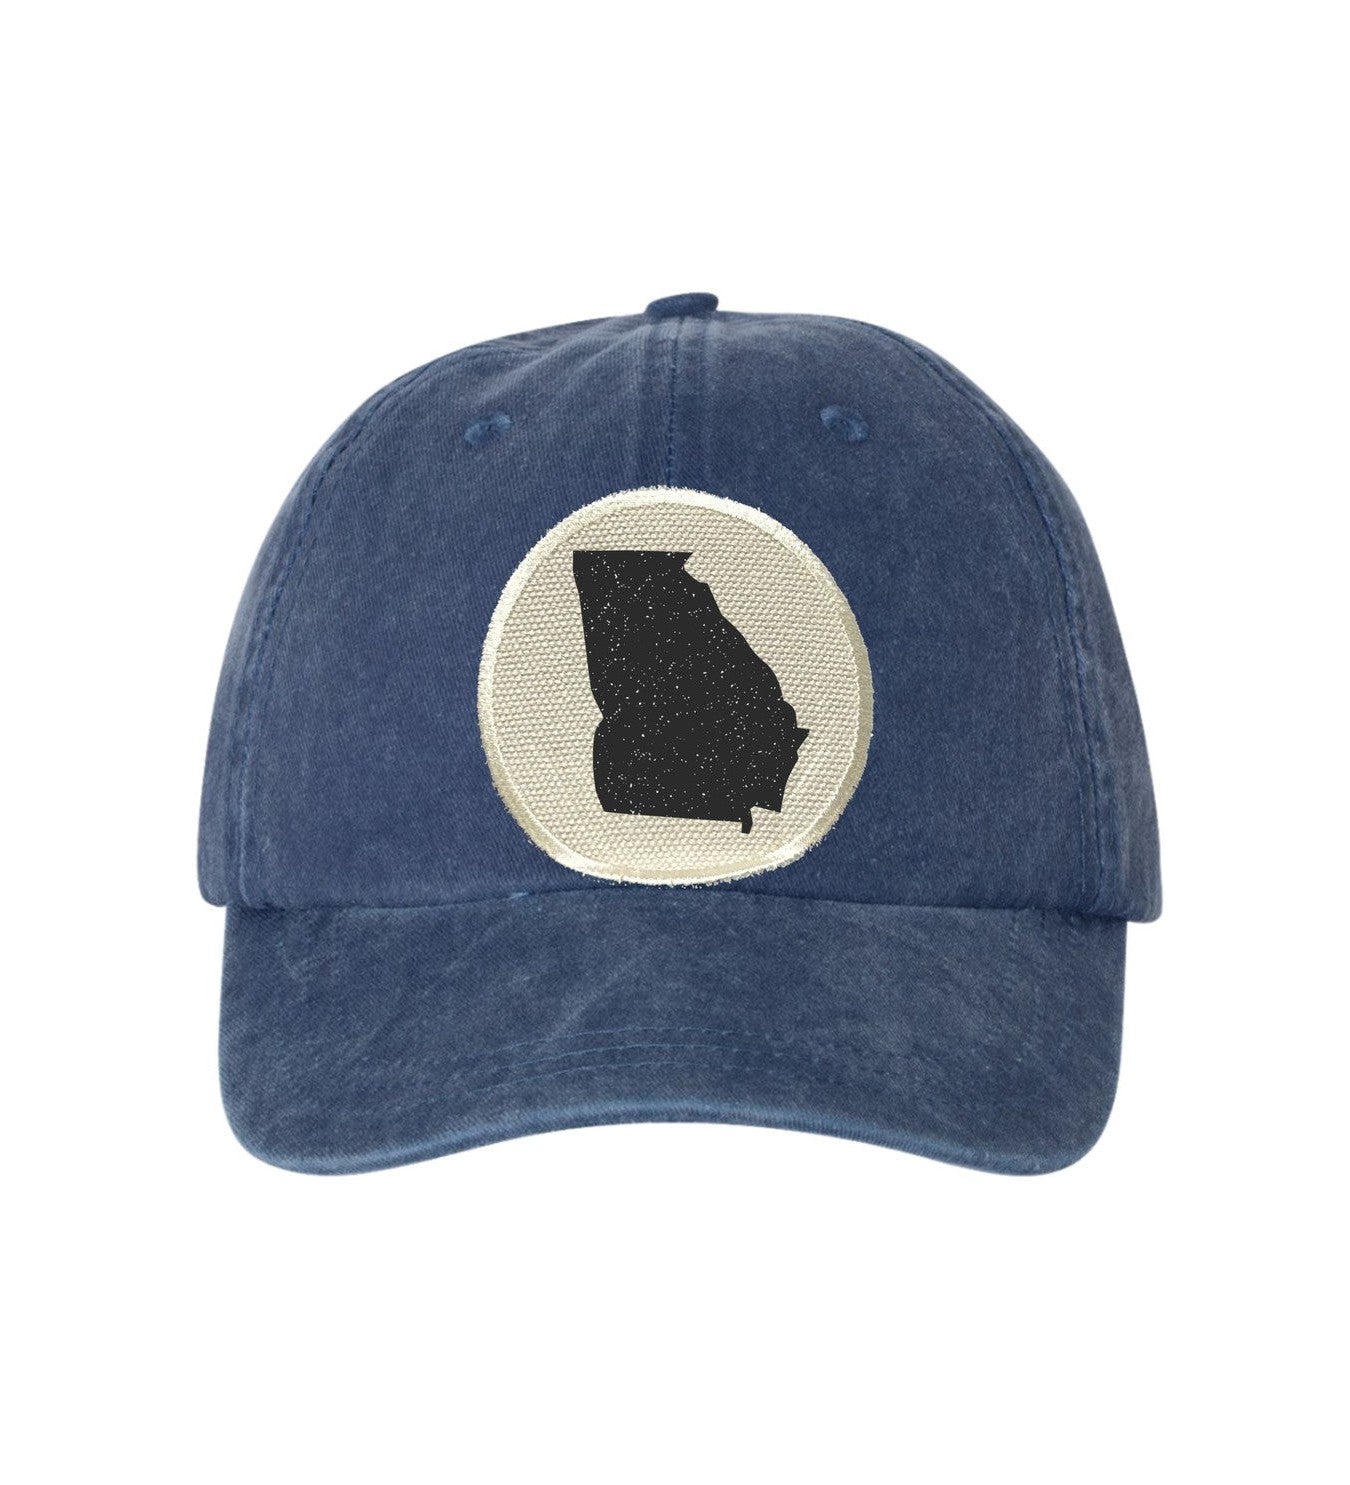 State Shape Ball Cap